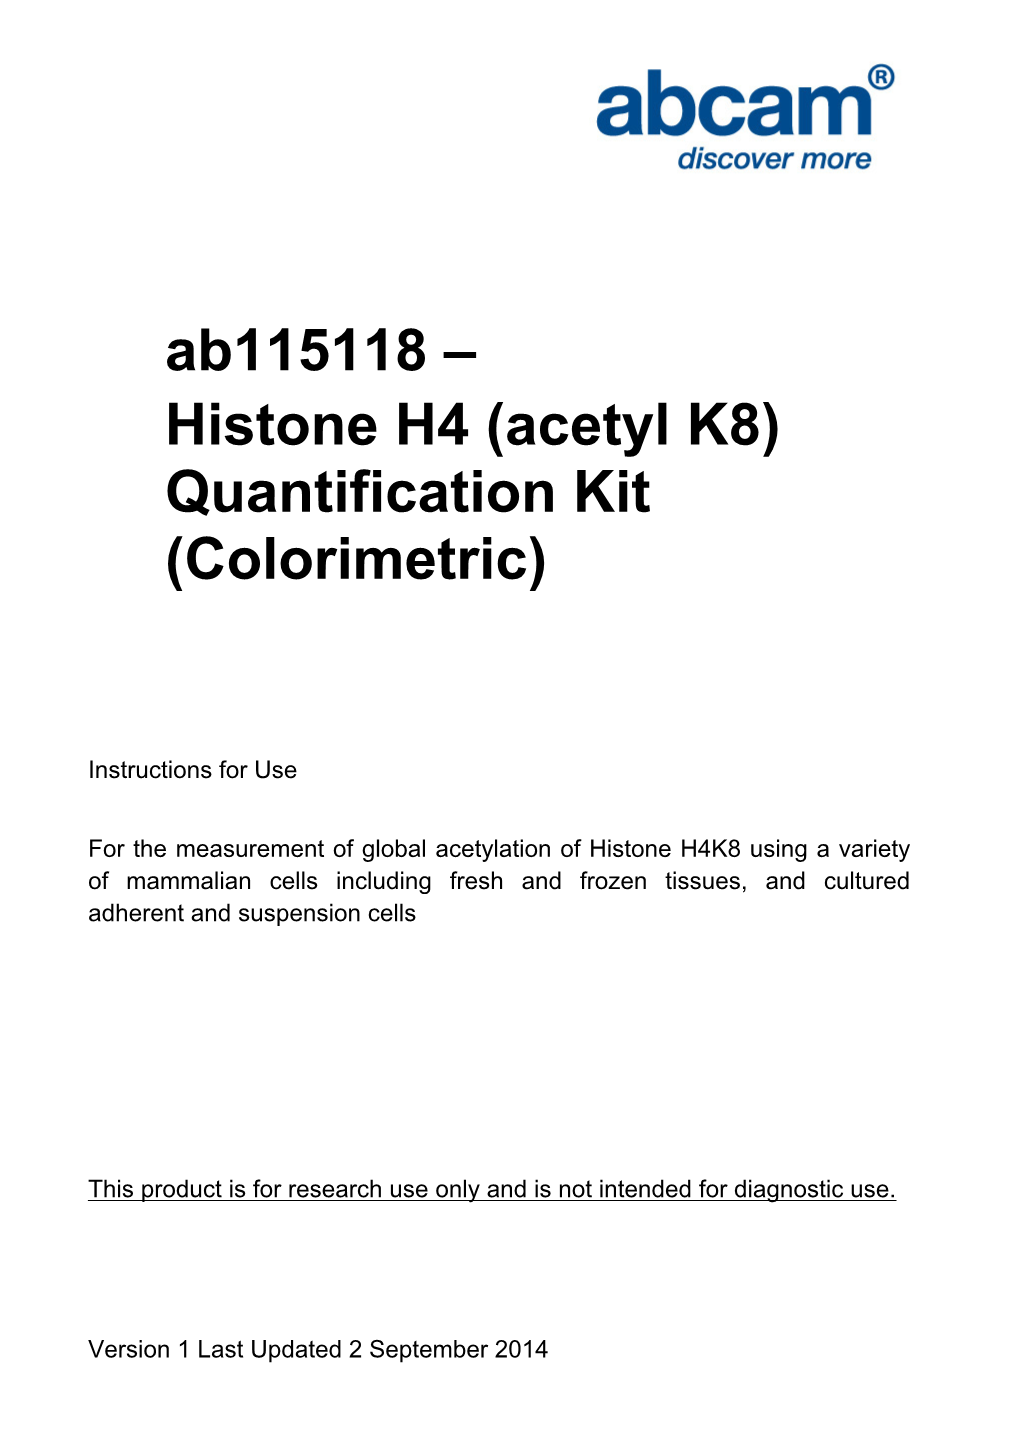 Ab115118 – Histone H4 (Acetyl K8) Quantification Kit (Colorimetric)